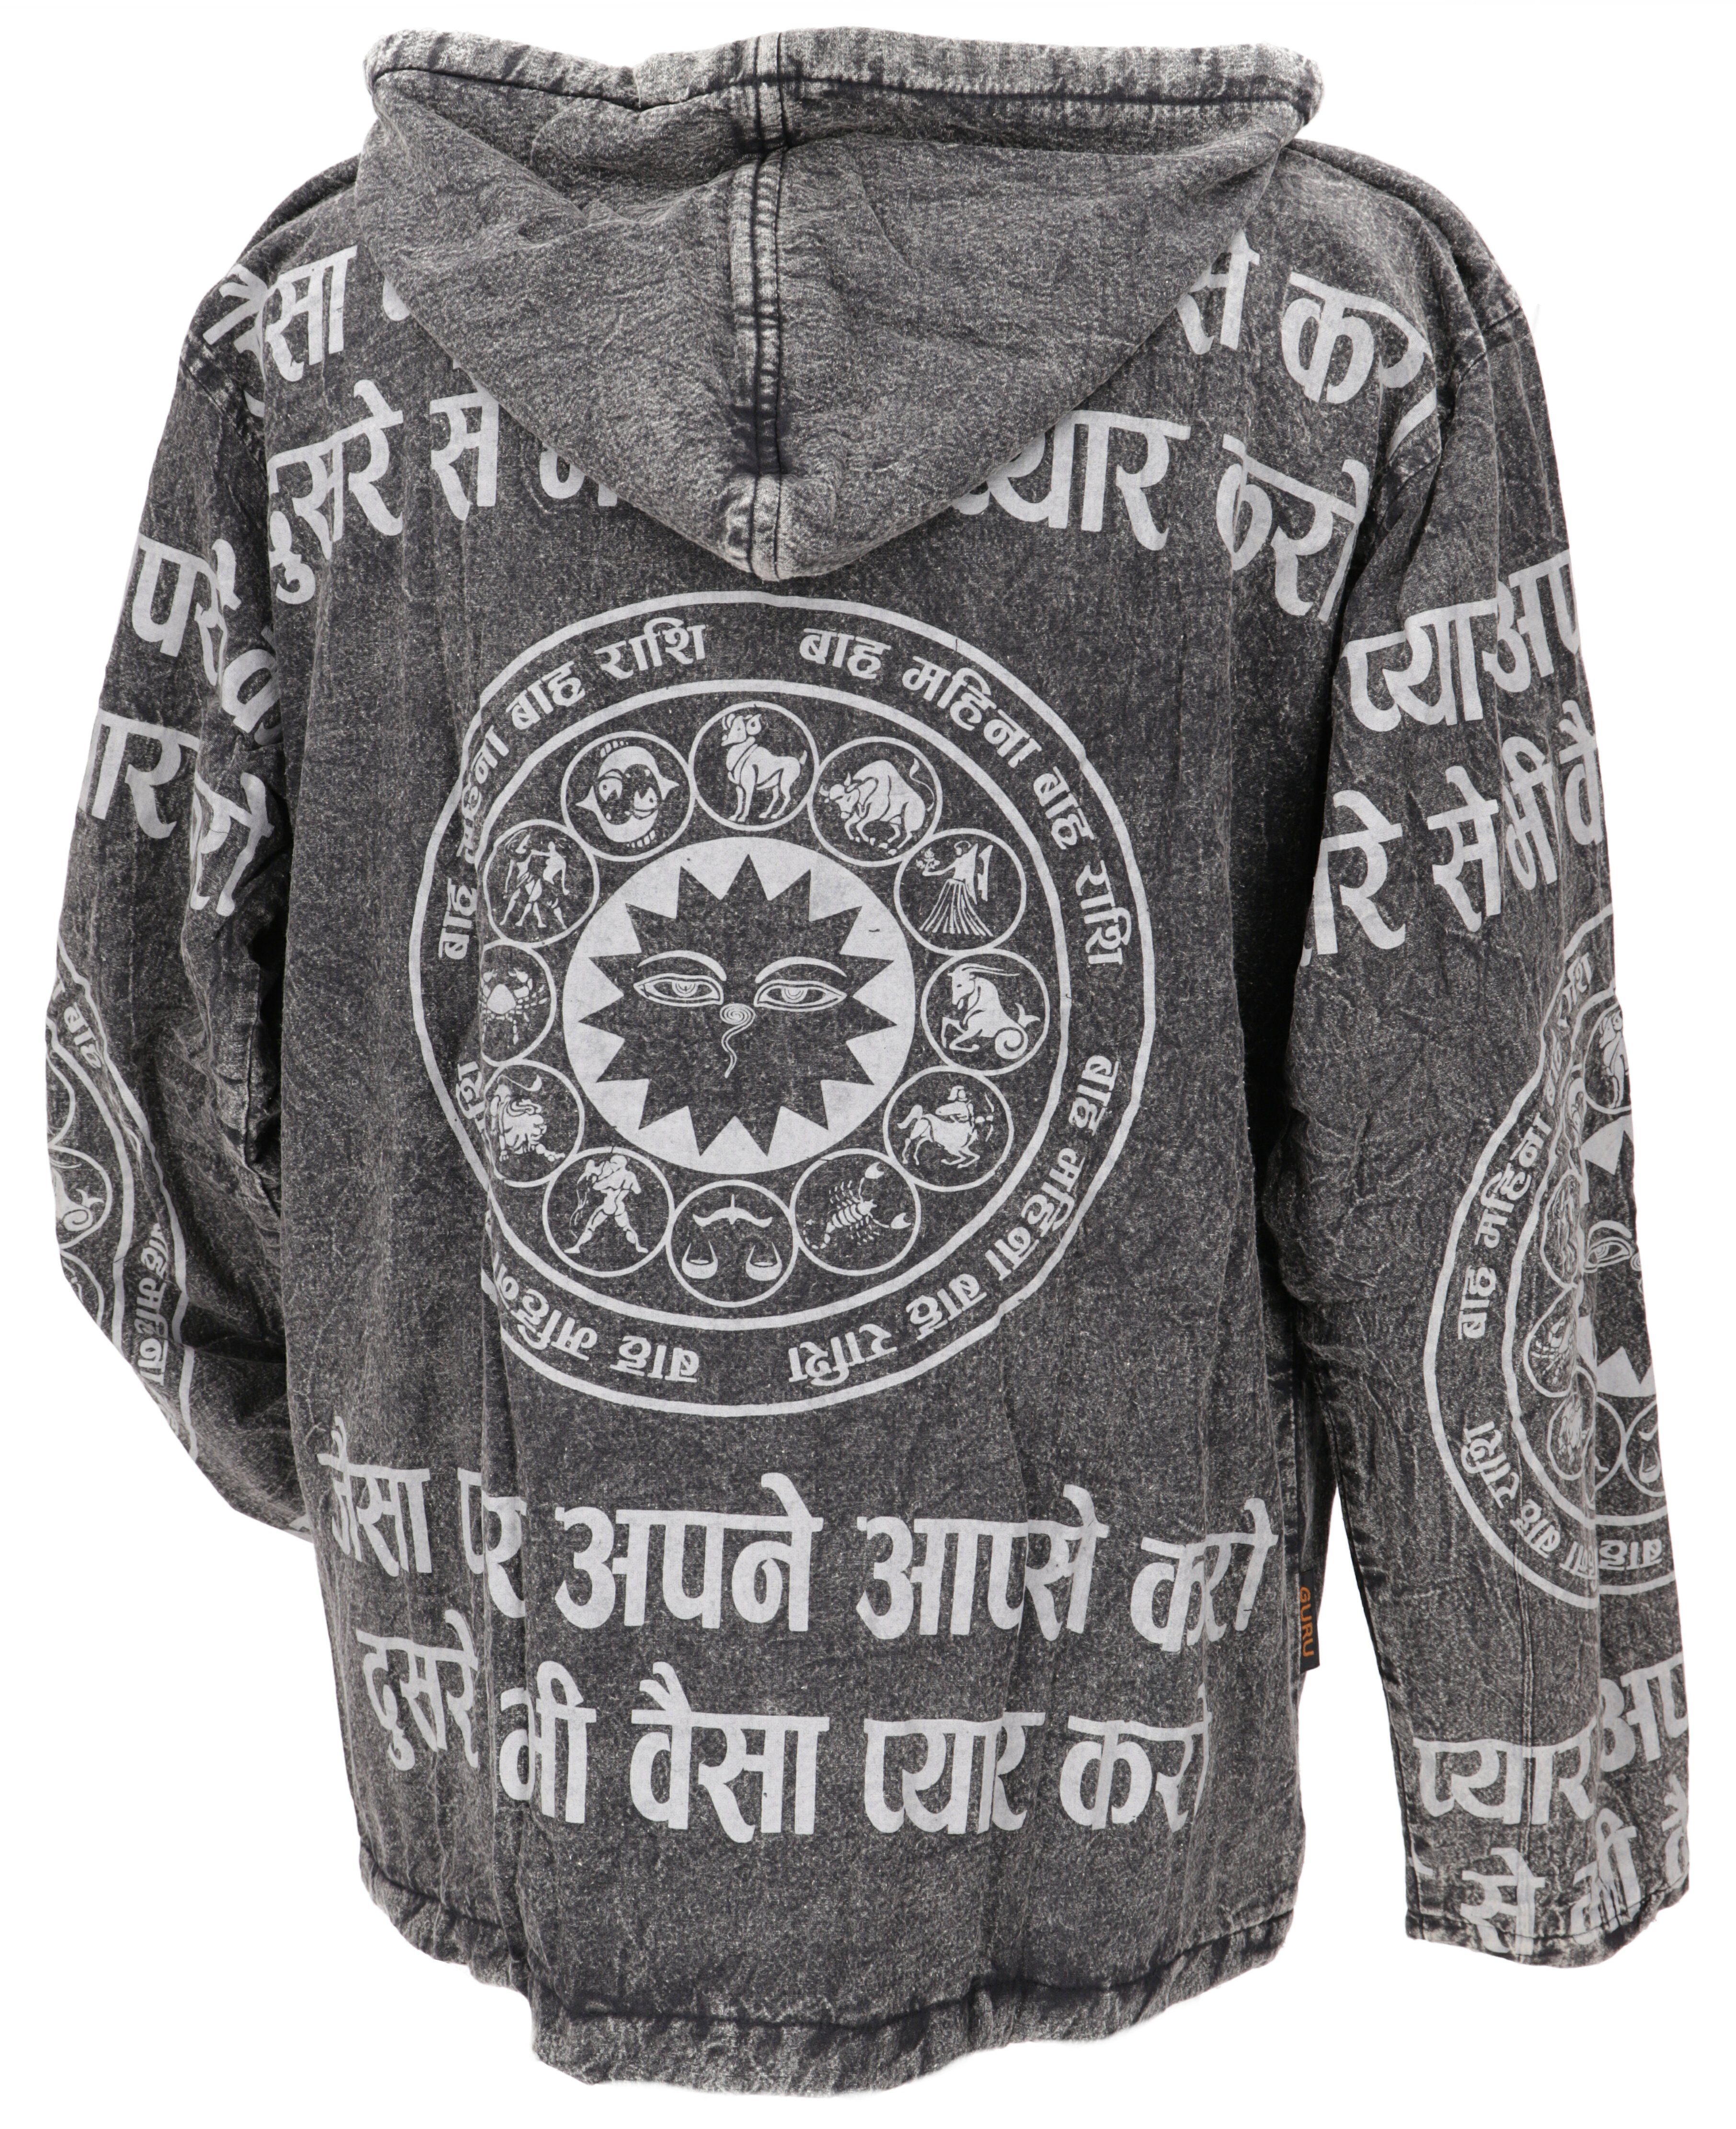 Bekleidung Druck Strickjacke Mantra Hoody Jacke, alternative mit Ethno Goa steingrau Guru-Shop -..